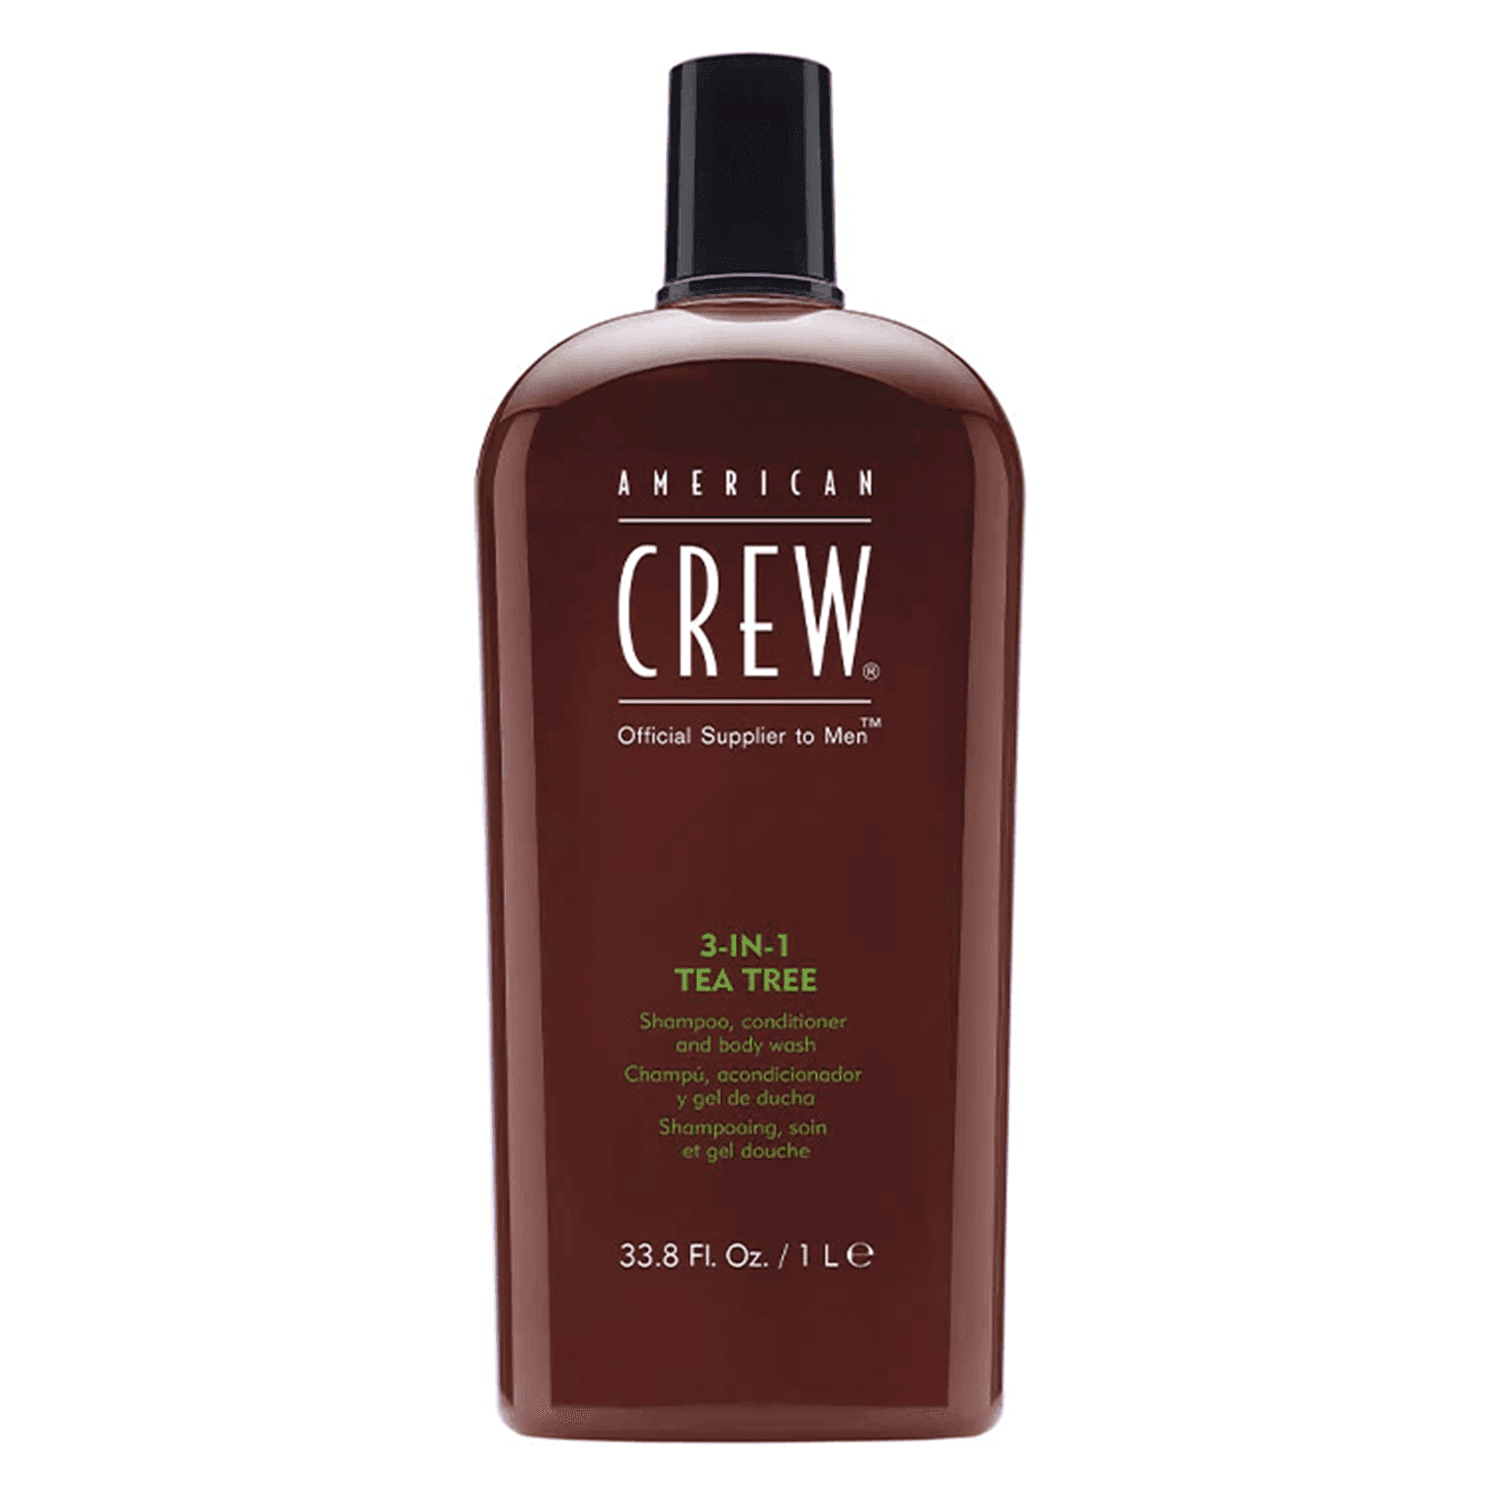 Crew Hair & Body Care - American Crew 3-in-1 Tea Tree Shampoo, Conditioner & Body Wash